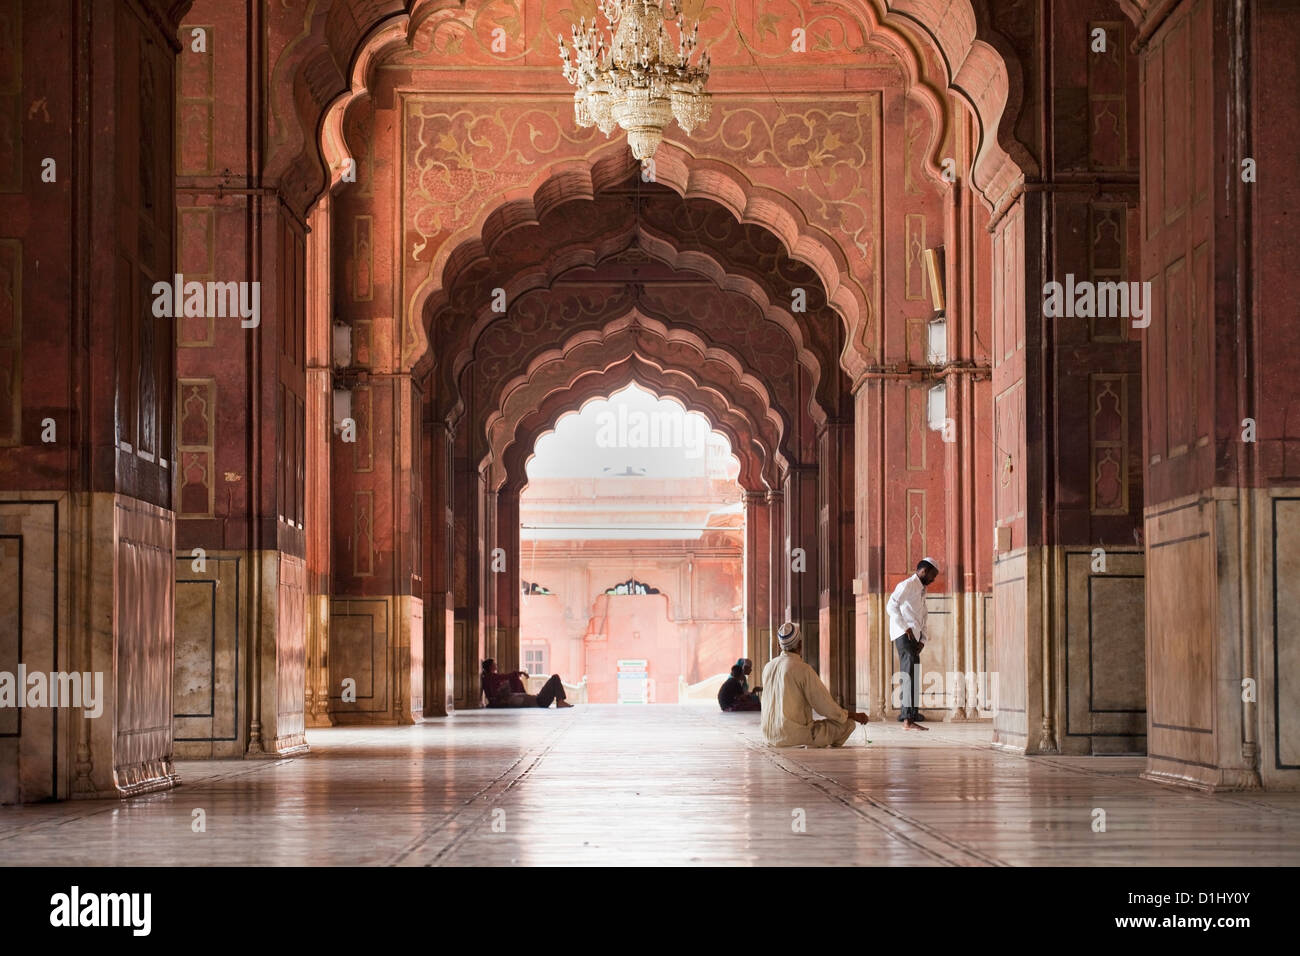 Les gens de prier dans la mosquée Jama Masjid, Delhi, Inde Banque D'Images